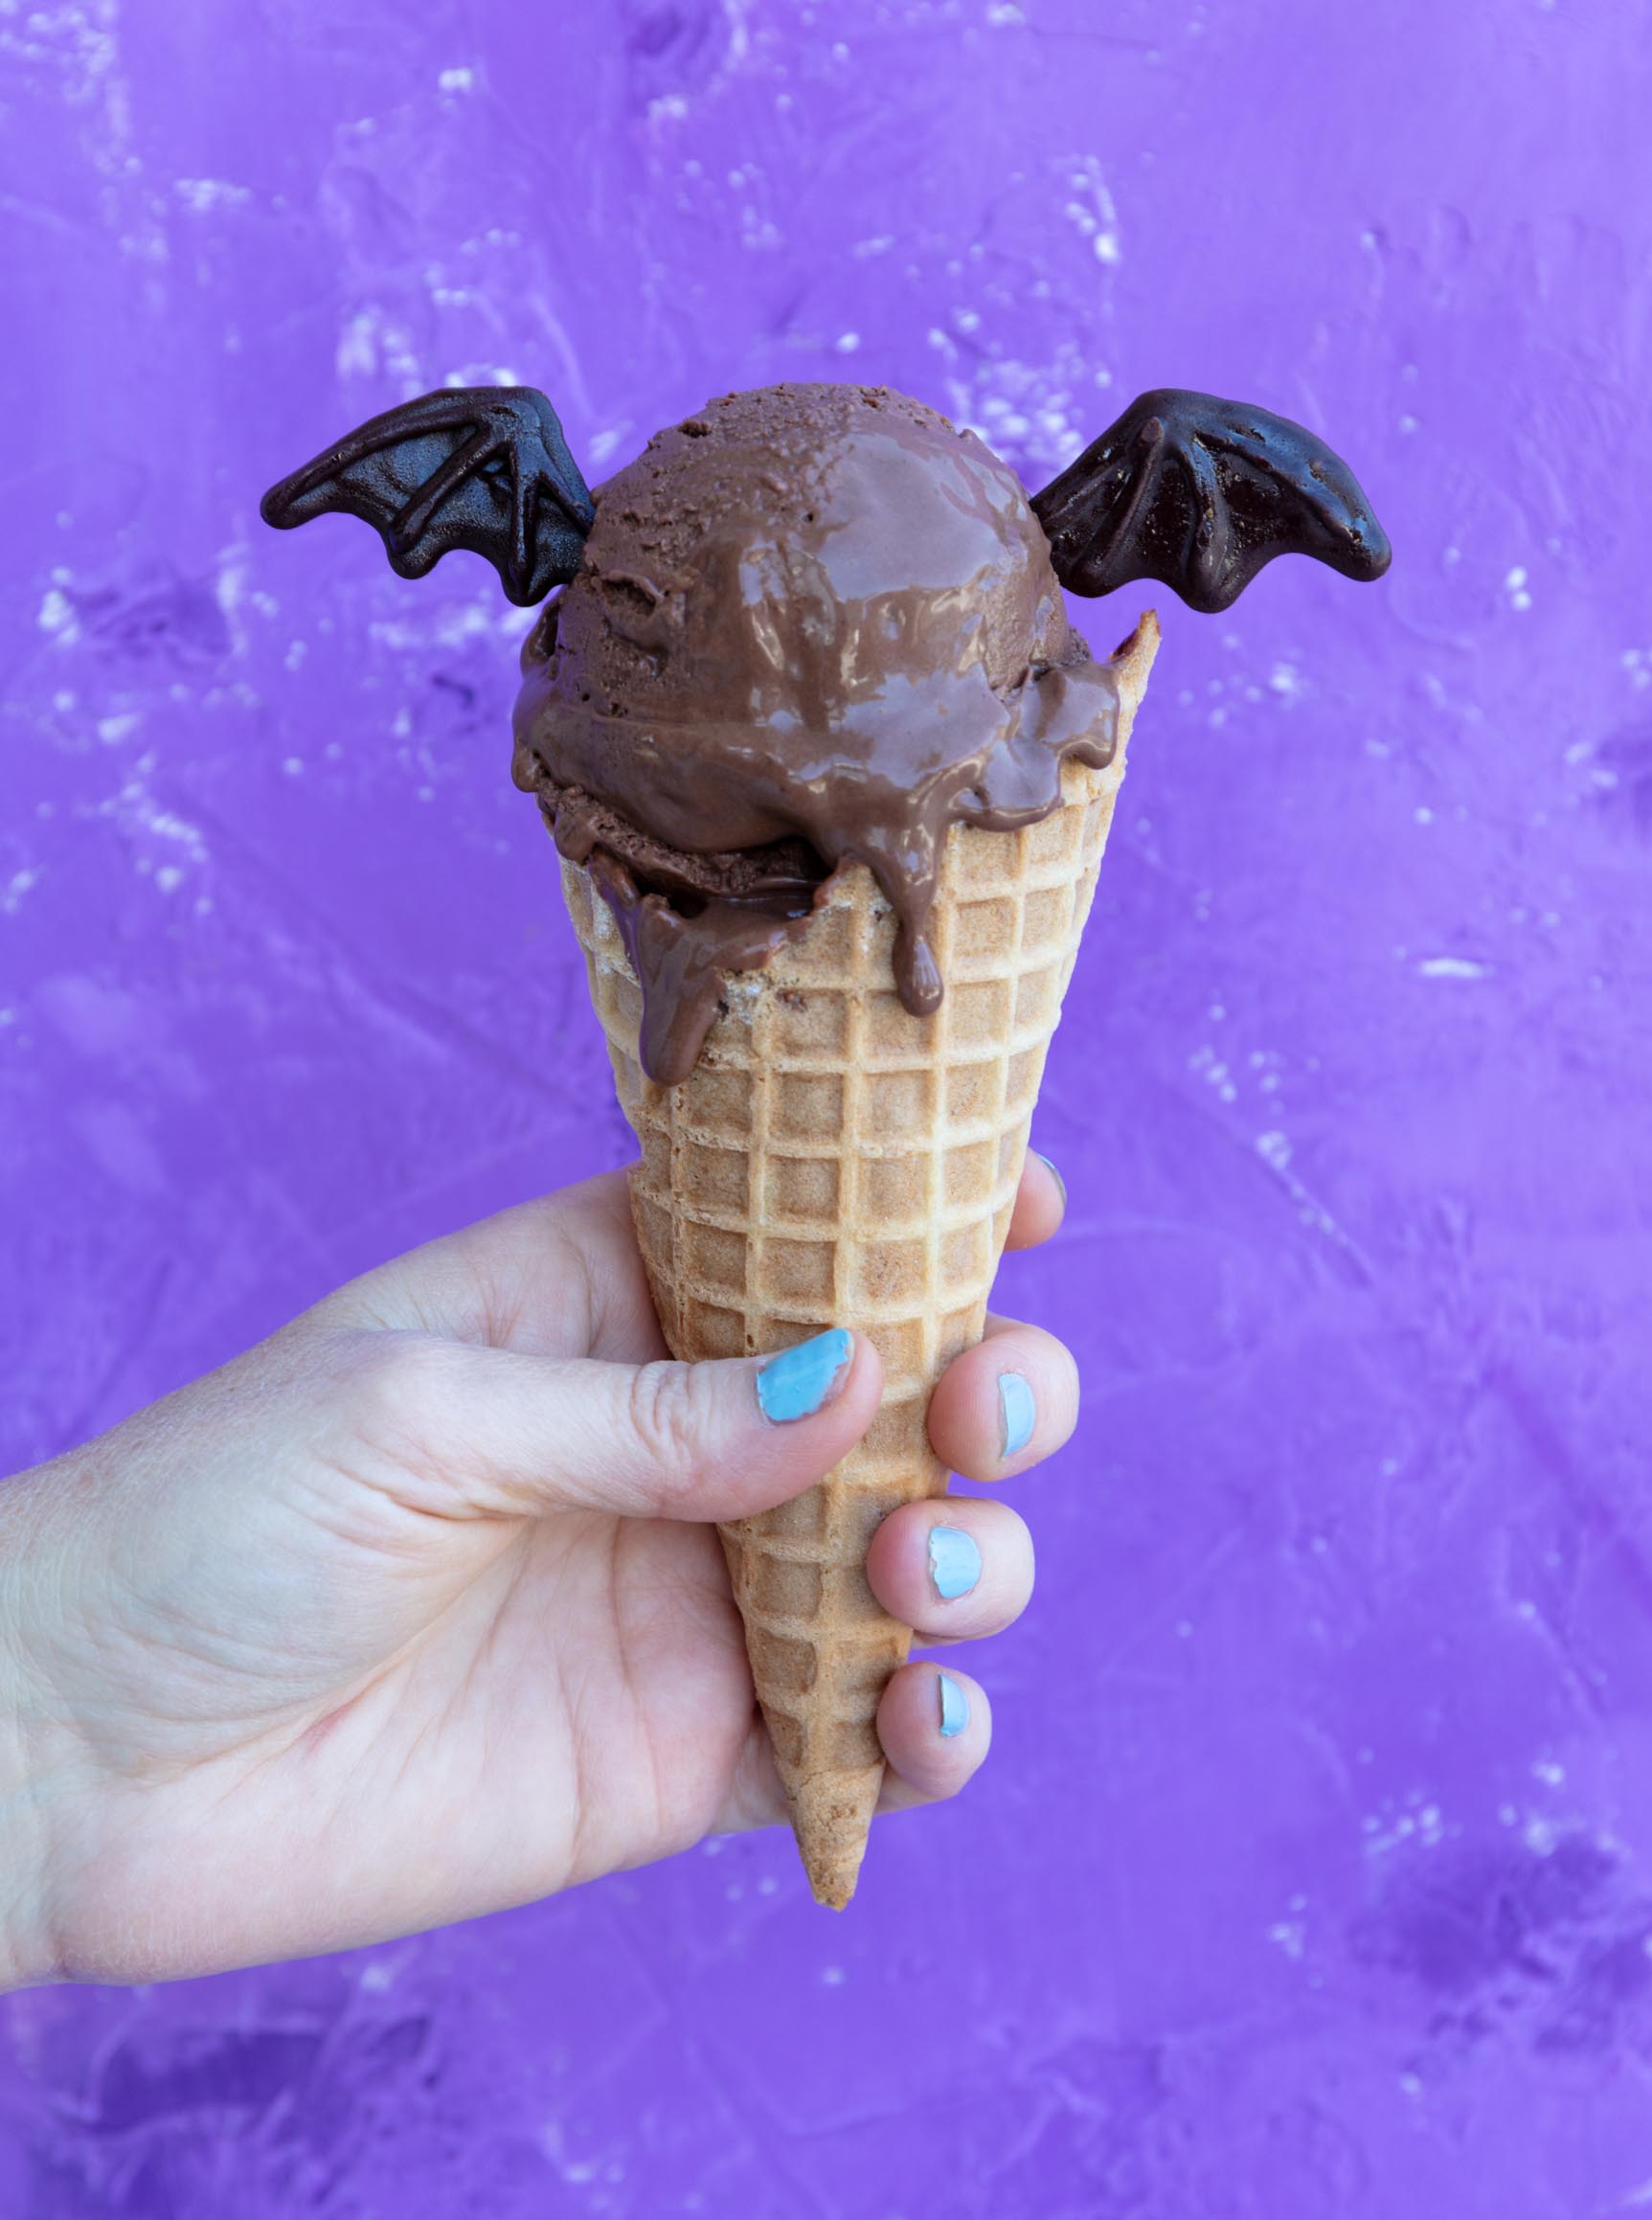 vegan ice cream cone decorated to look like a bat